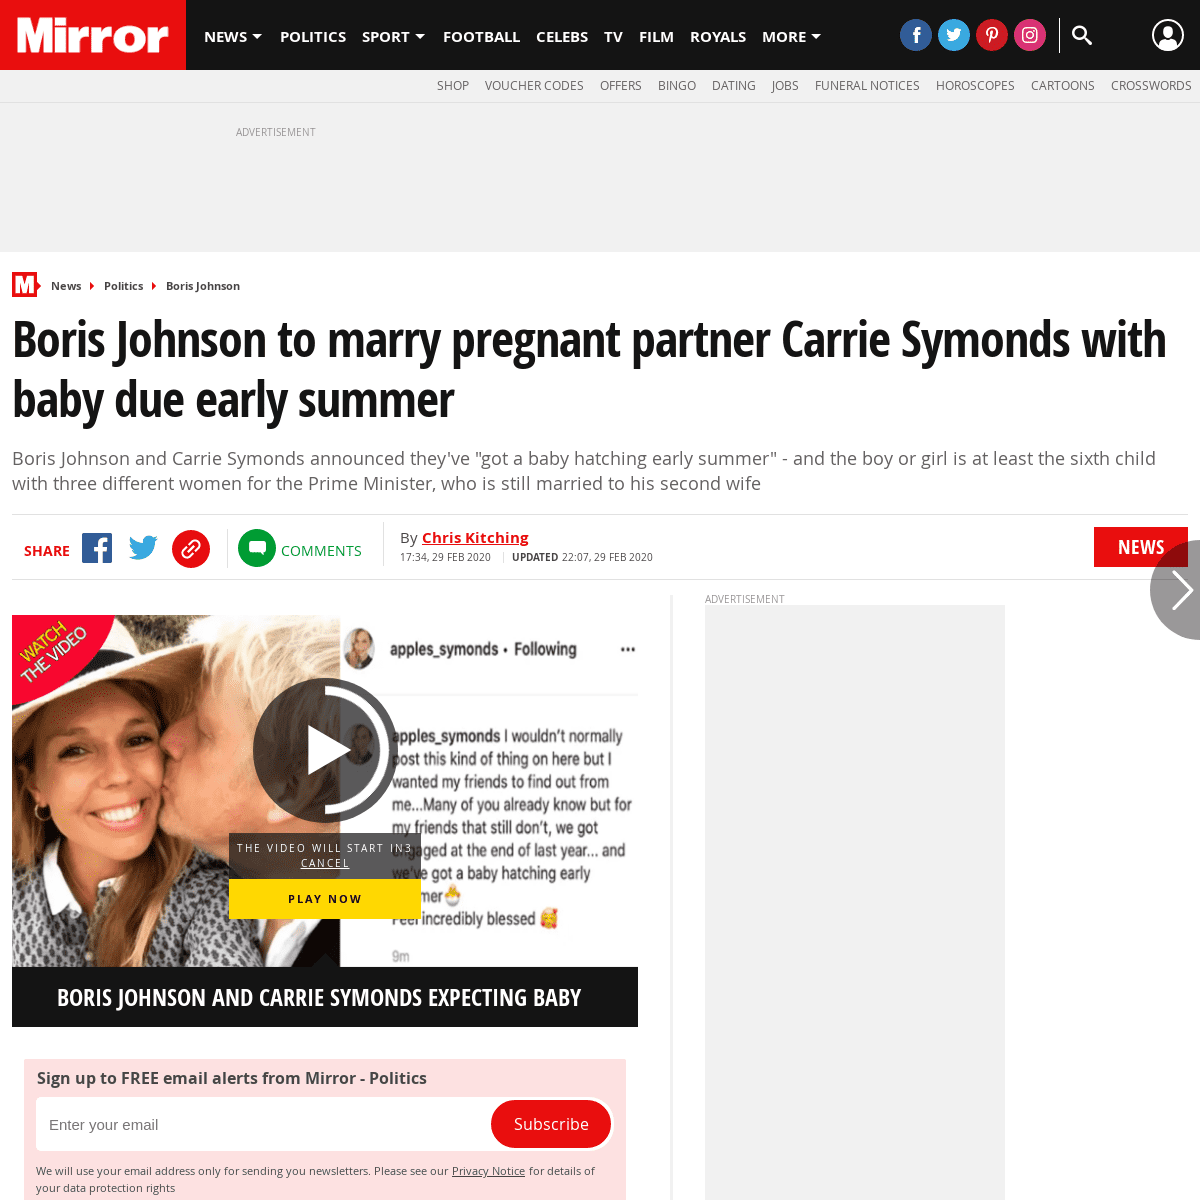 A complete backup of www.mirror.co.uk/news/politics/breaking-boris-johnson-marry-pregnant-21605286